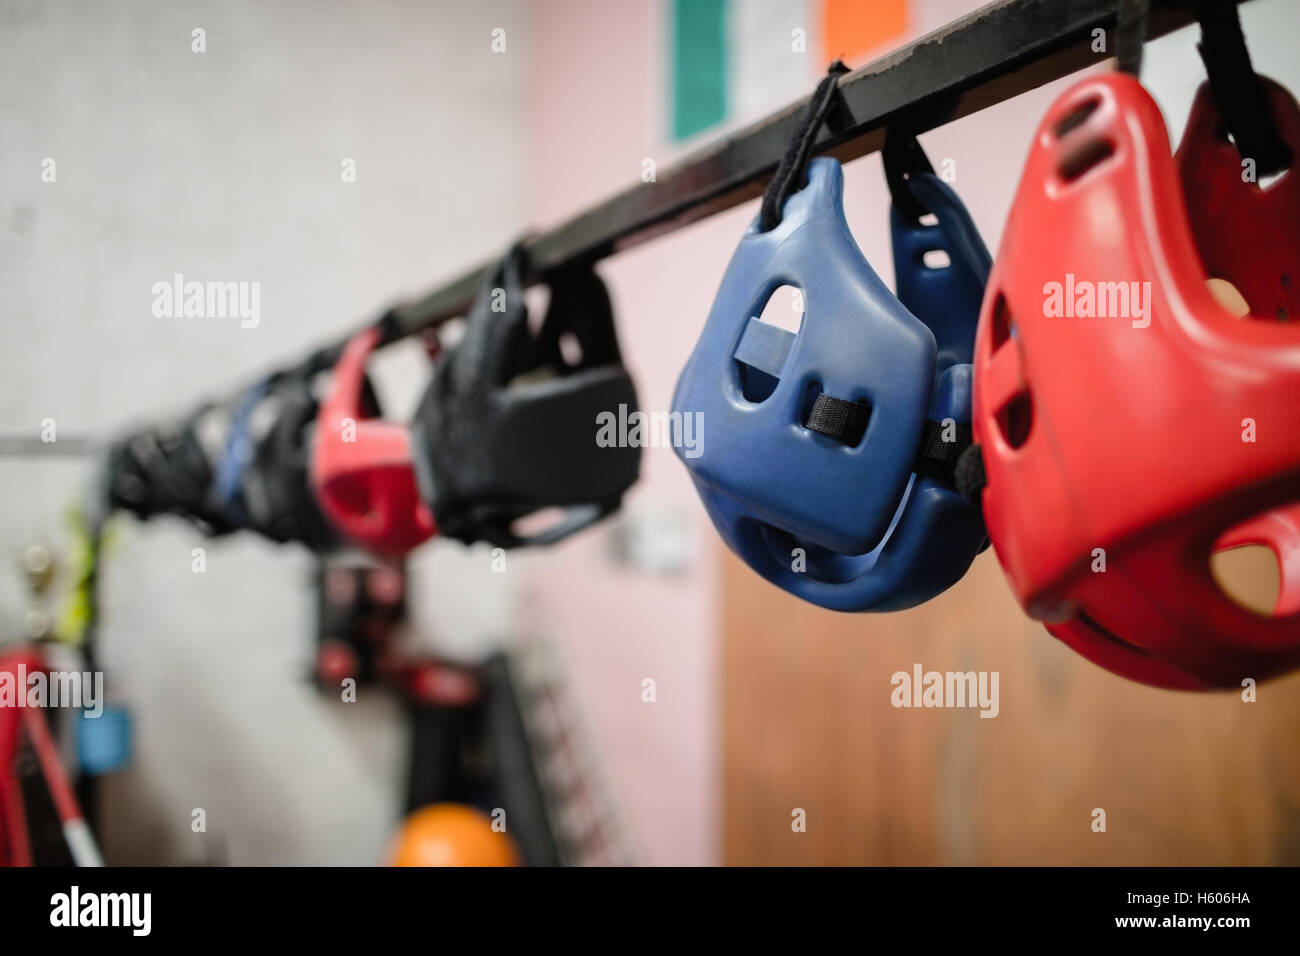 Close-up of various headgear hanging Stock Photo